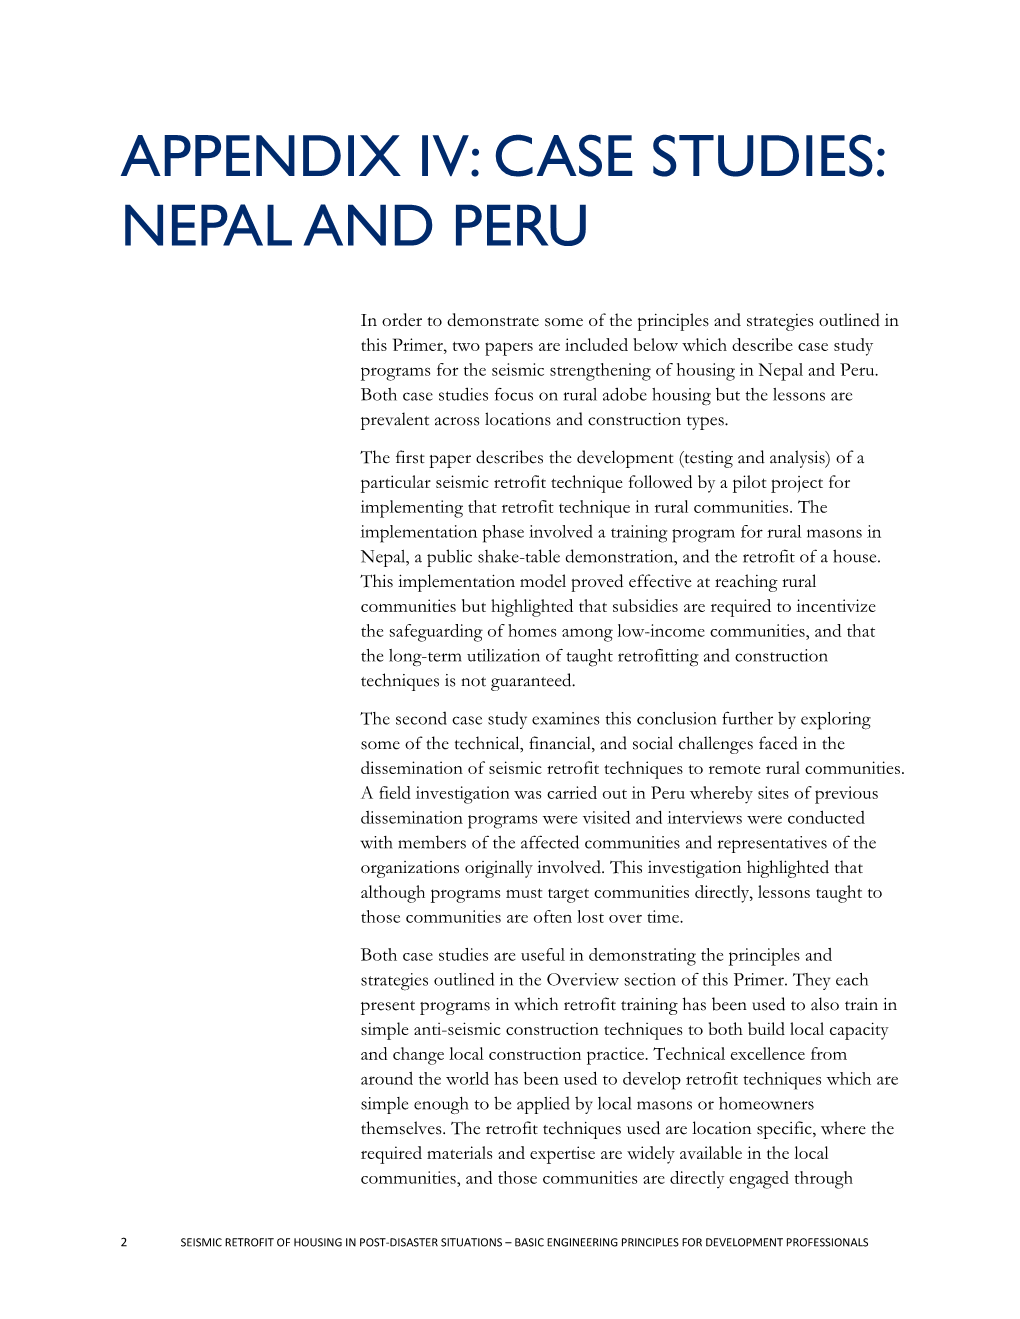 Appendix Iv: Case Studies: Nepal and Peru